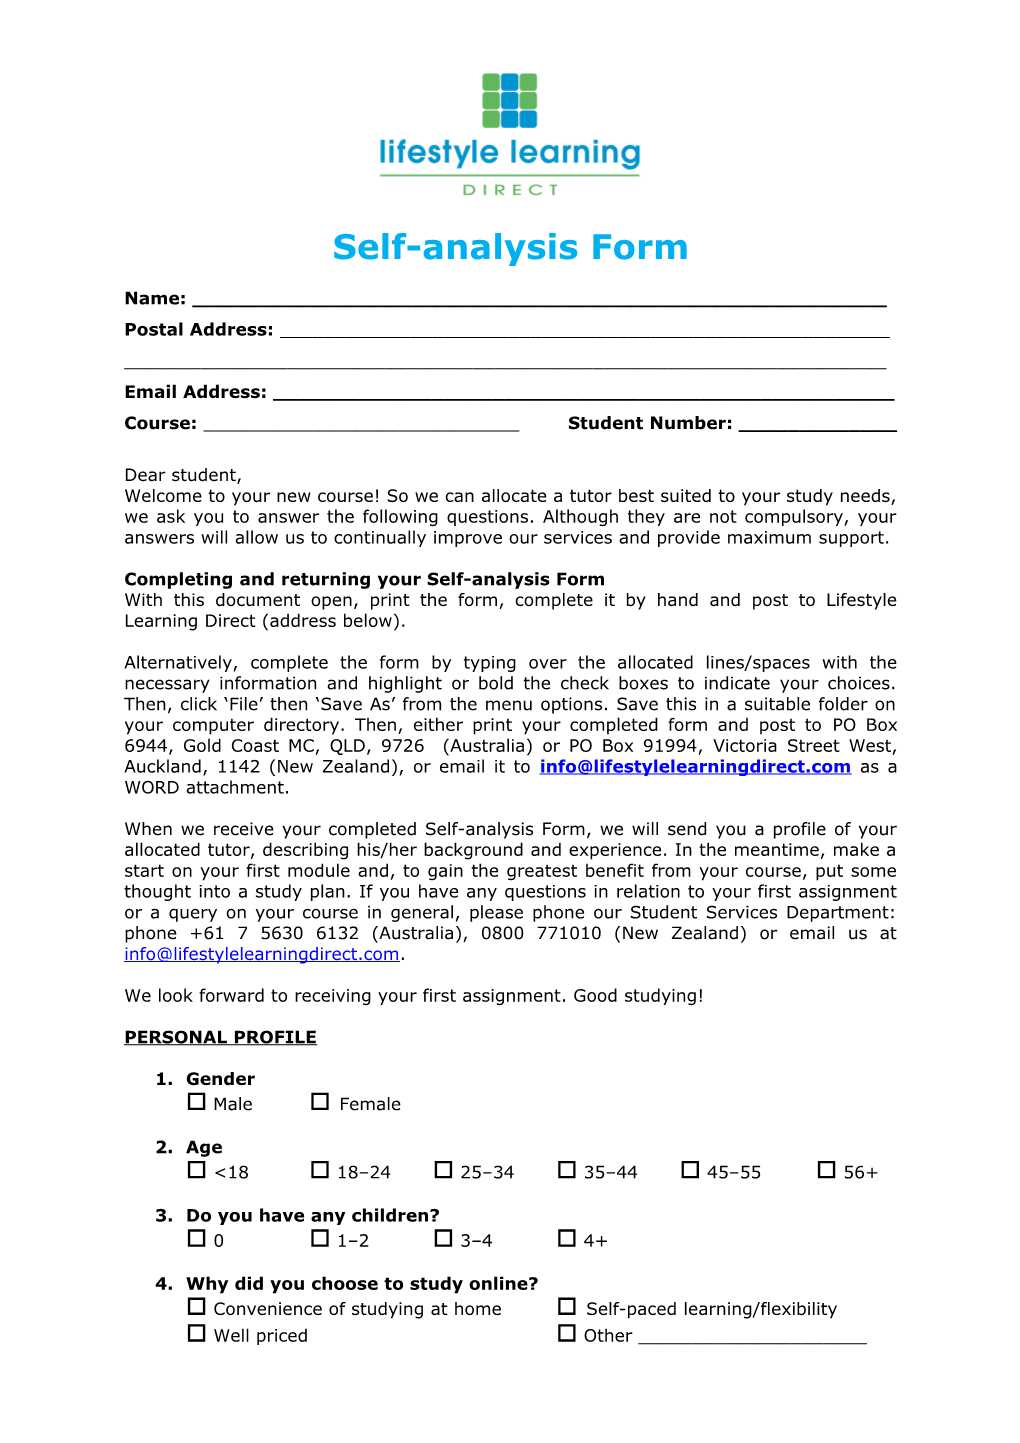 Self-Analysis Form